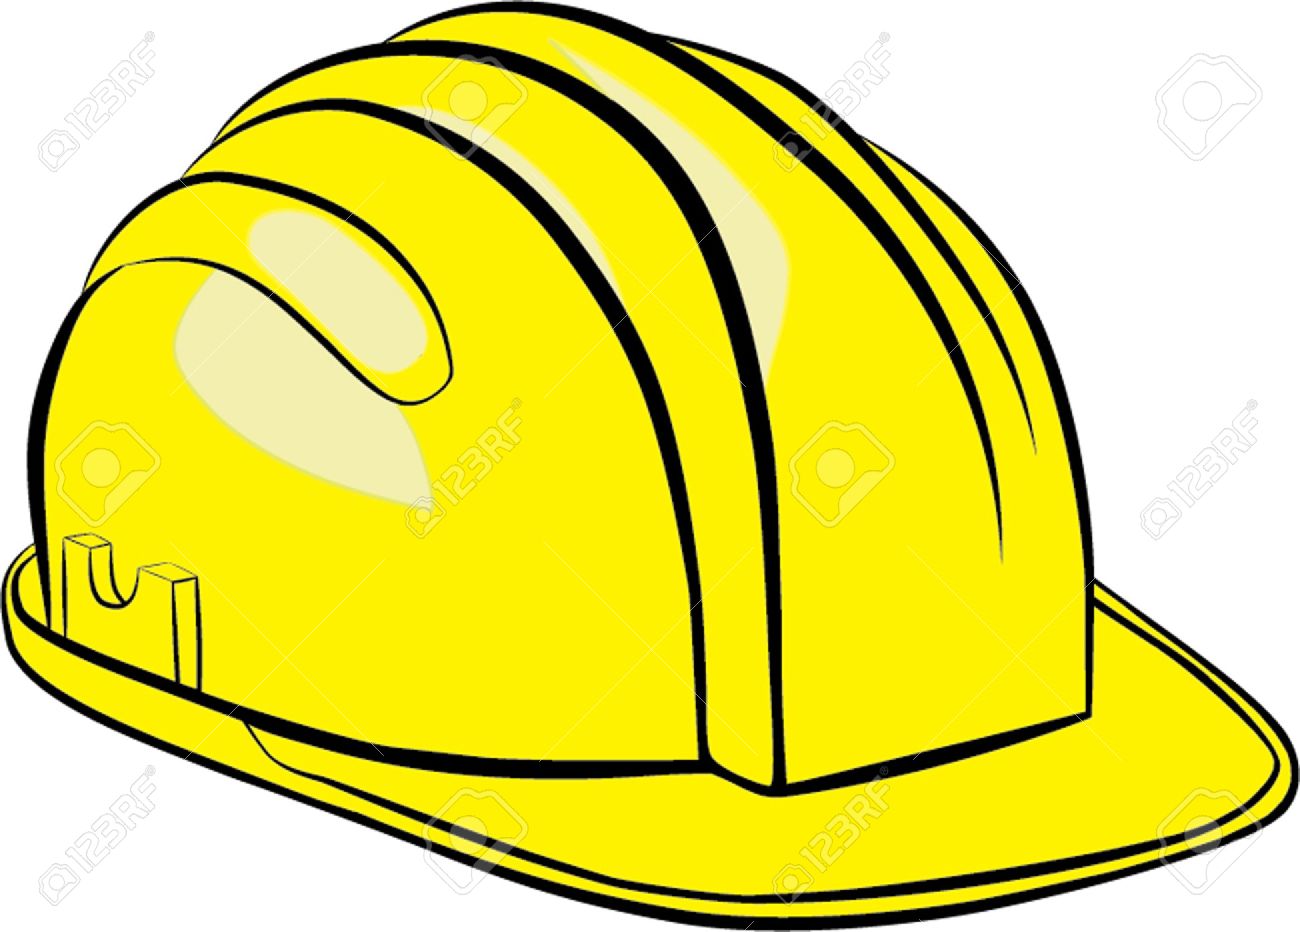 Construction hard hat clipart